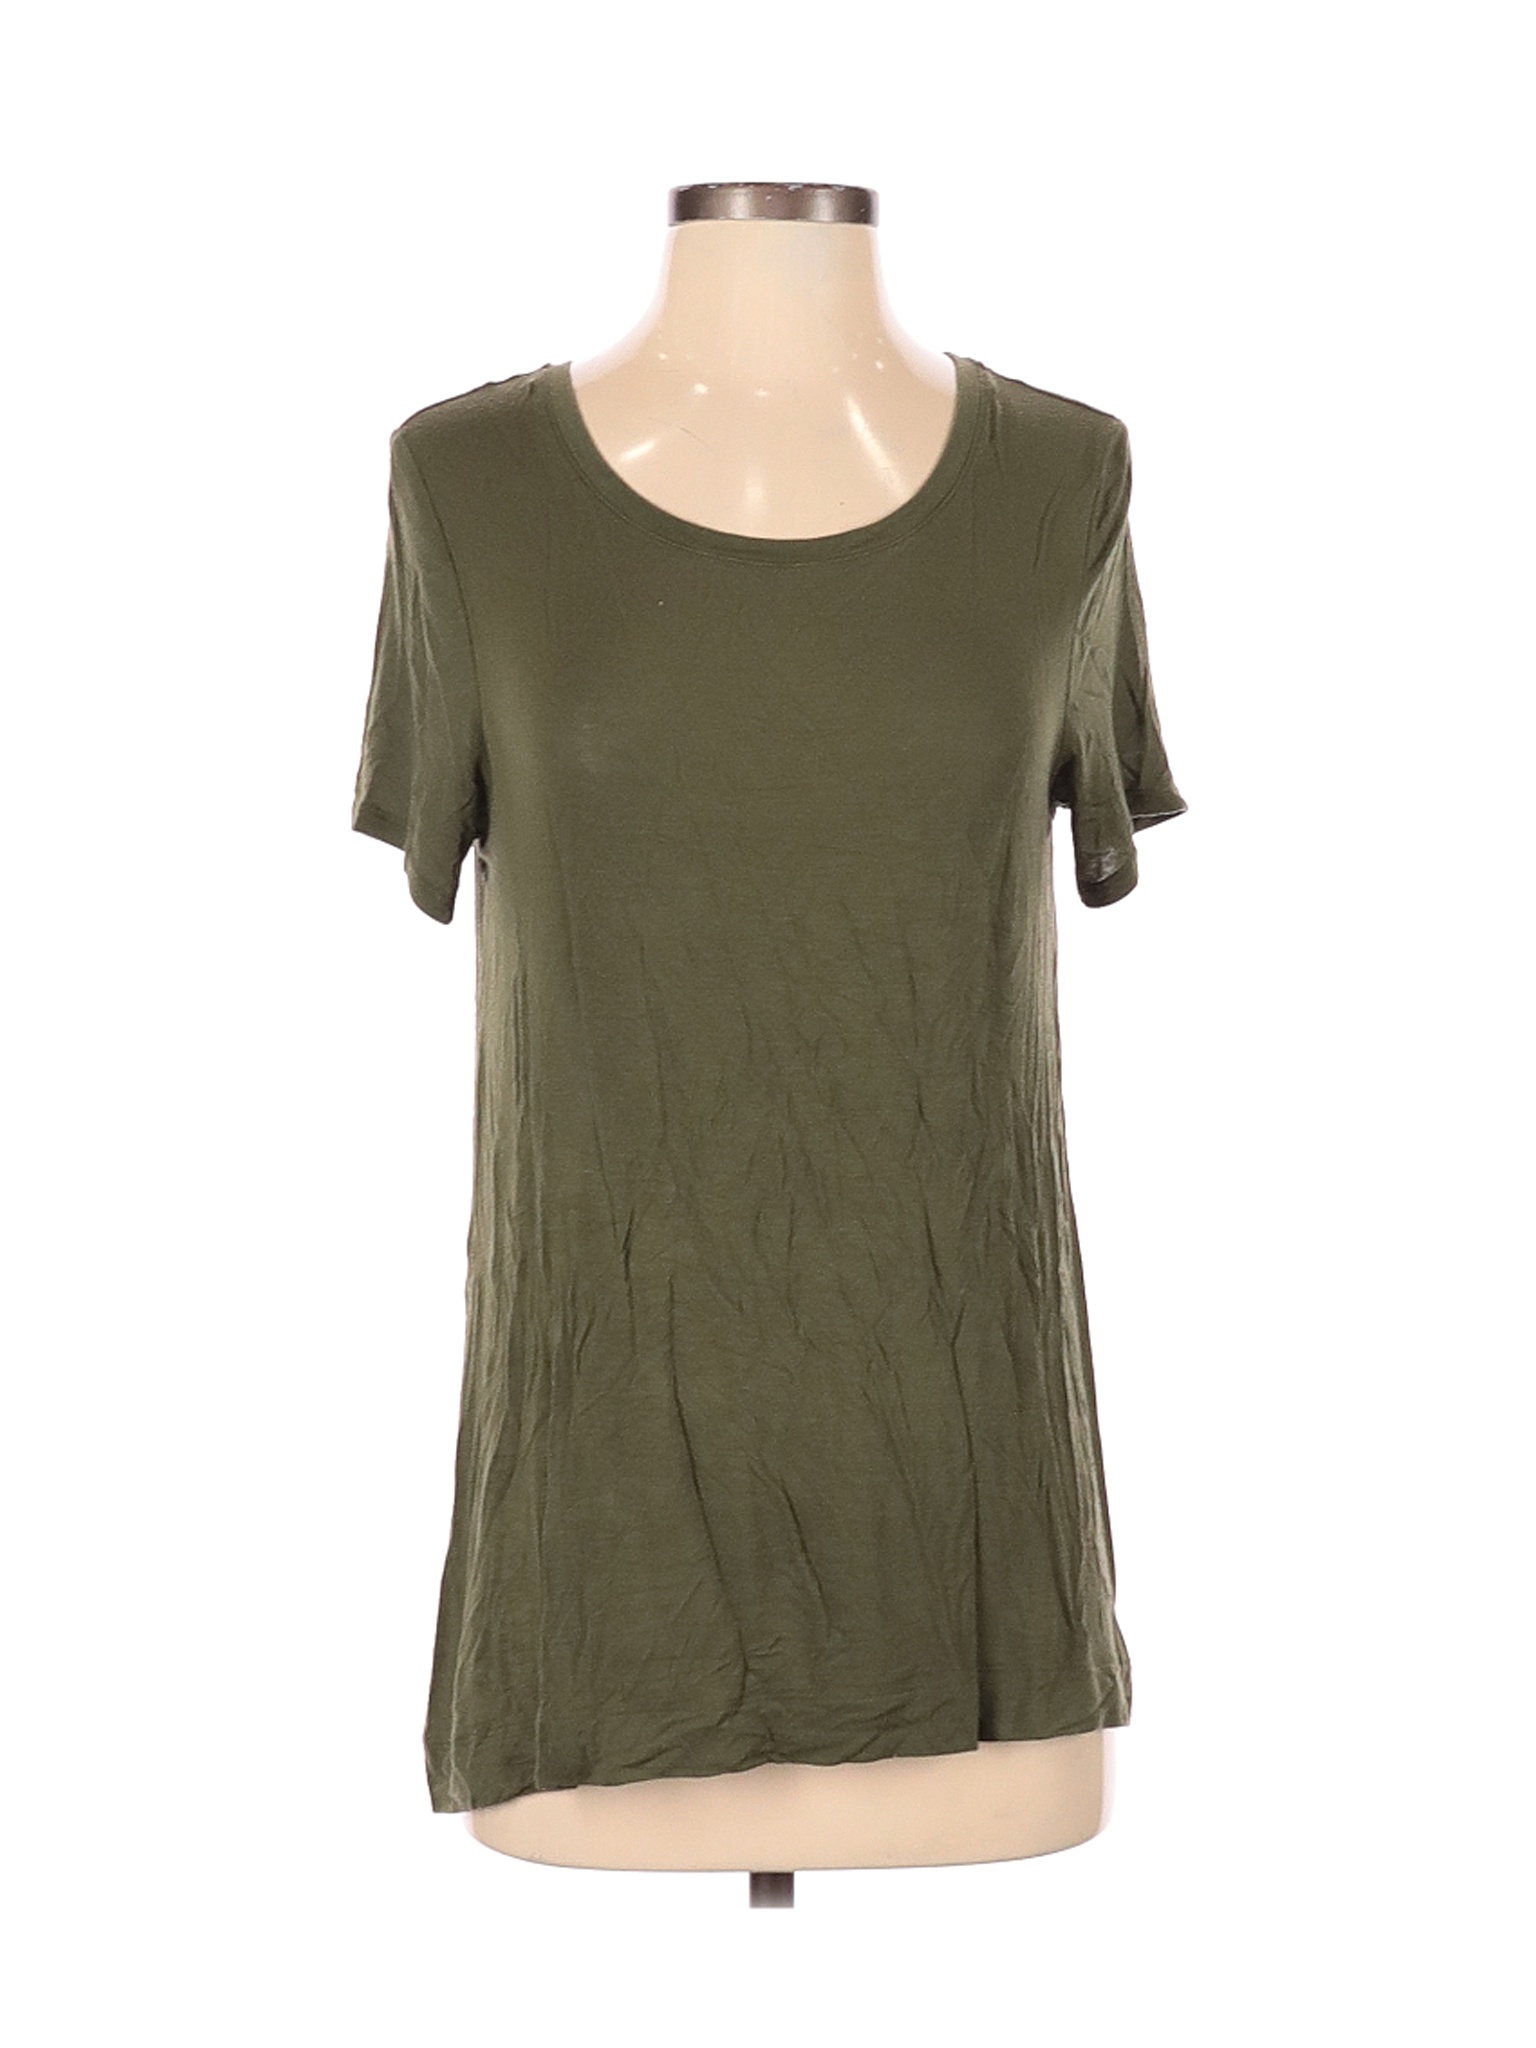 Old Navy Women Green Short Sleeve T-Shirt XS | eBay